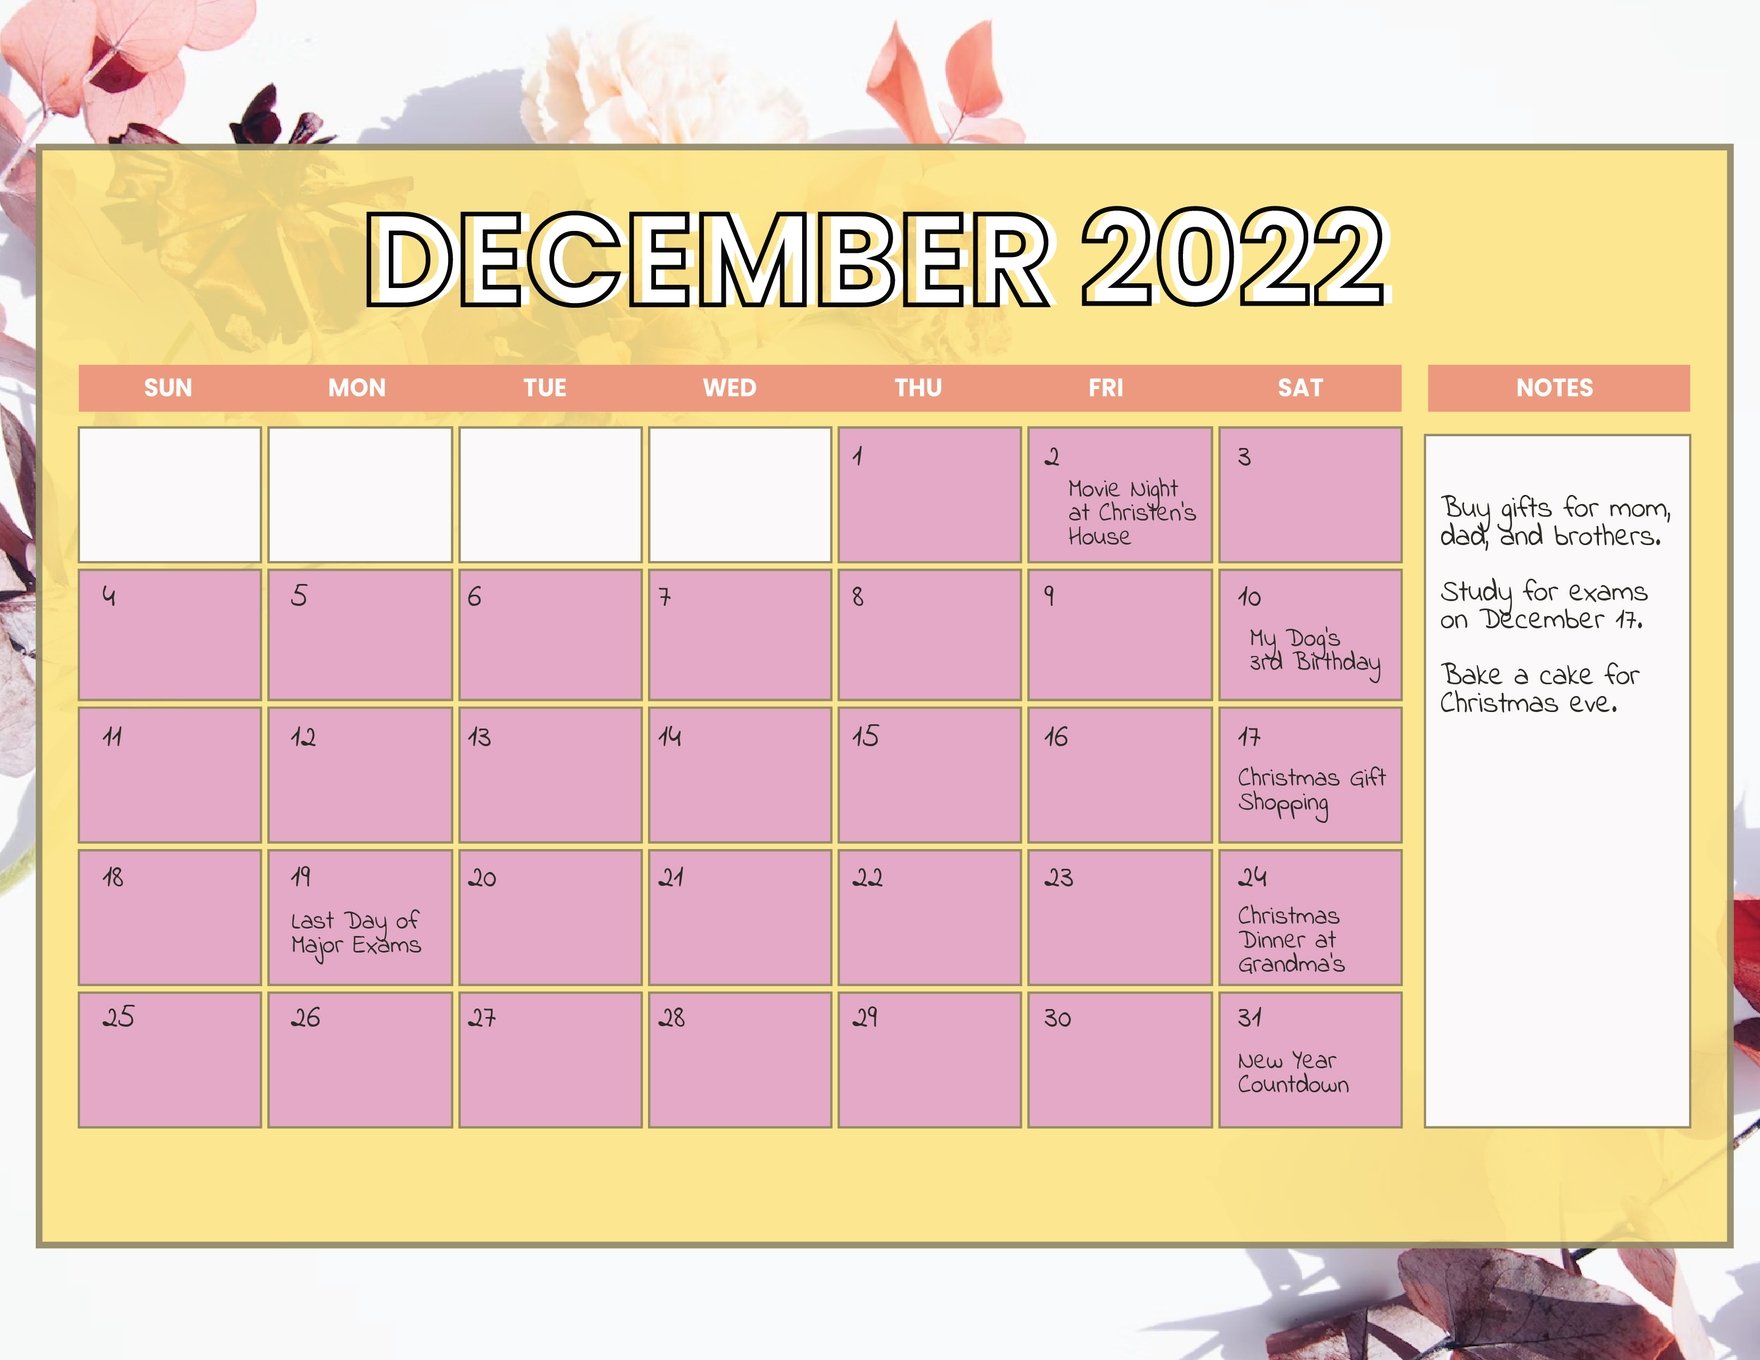 Floral December 2022 Calendar Template in Word, Illustrator, PSD